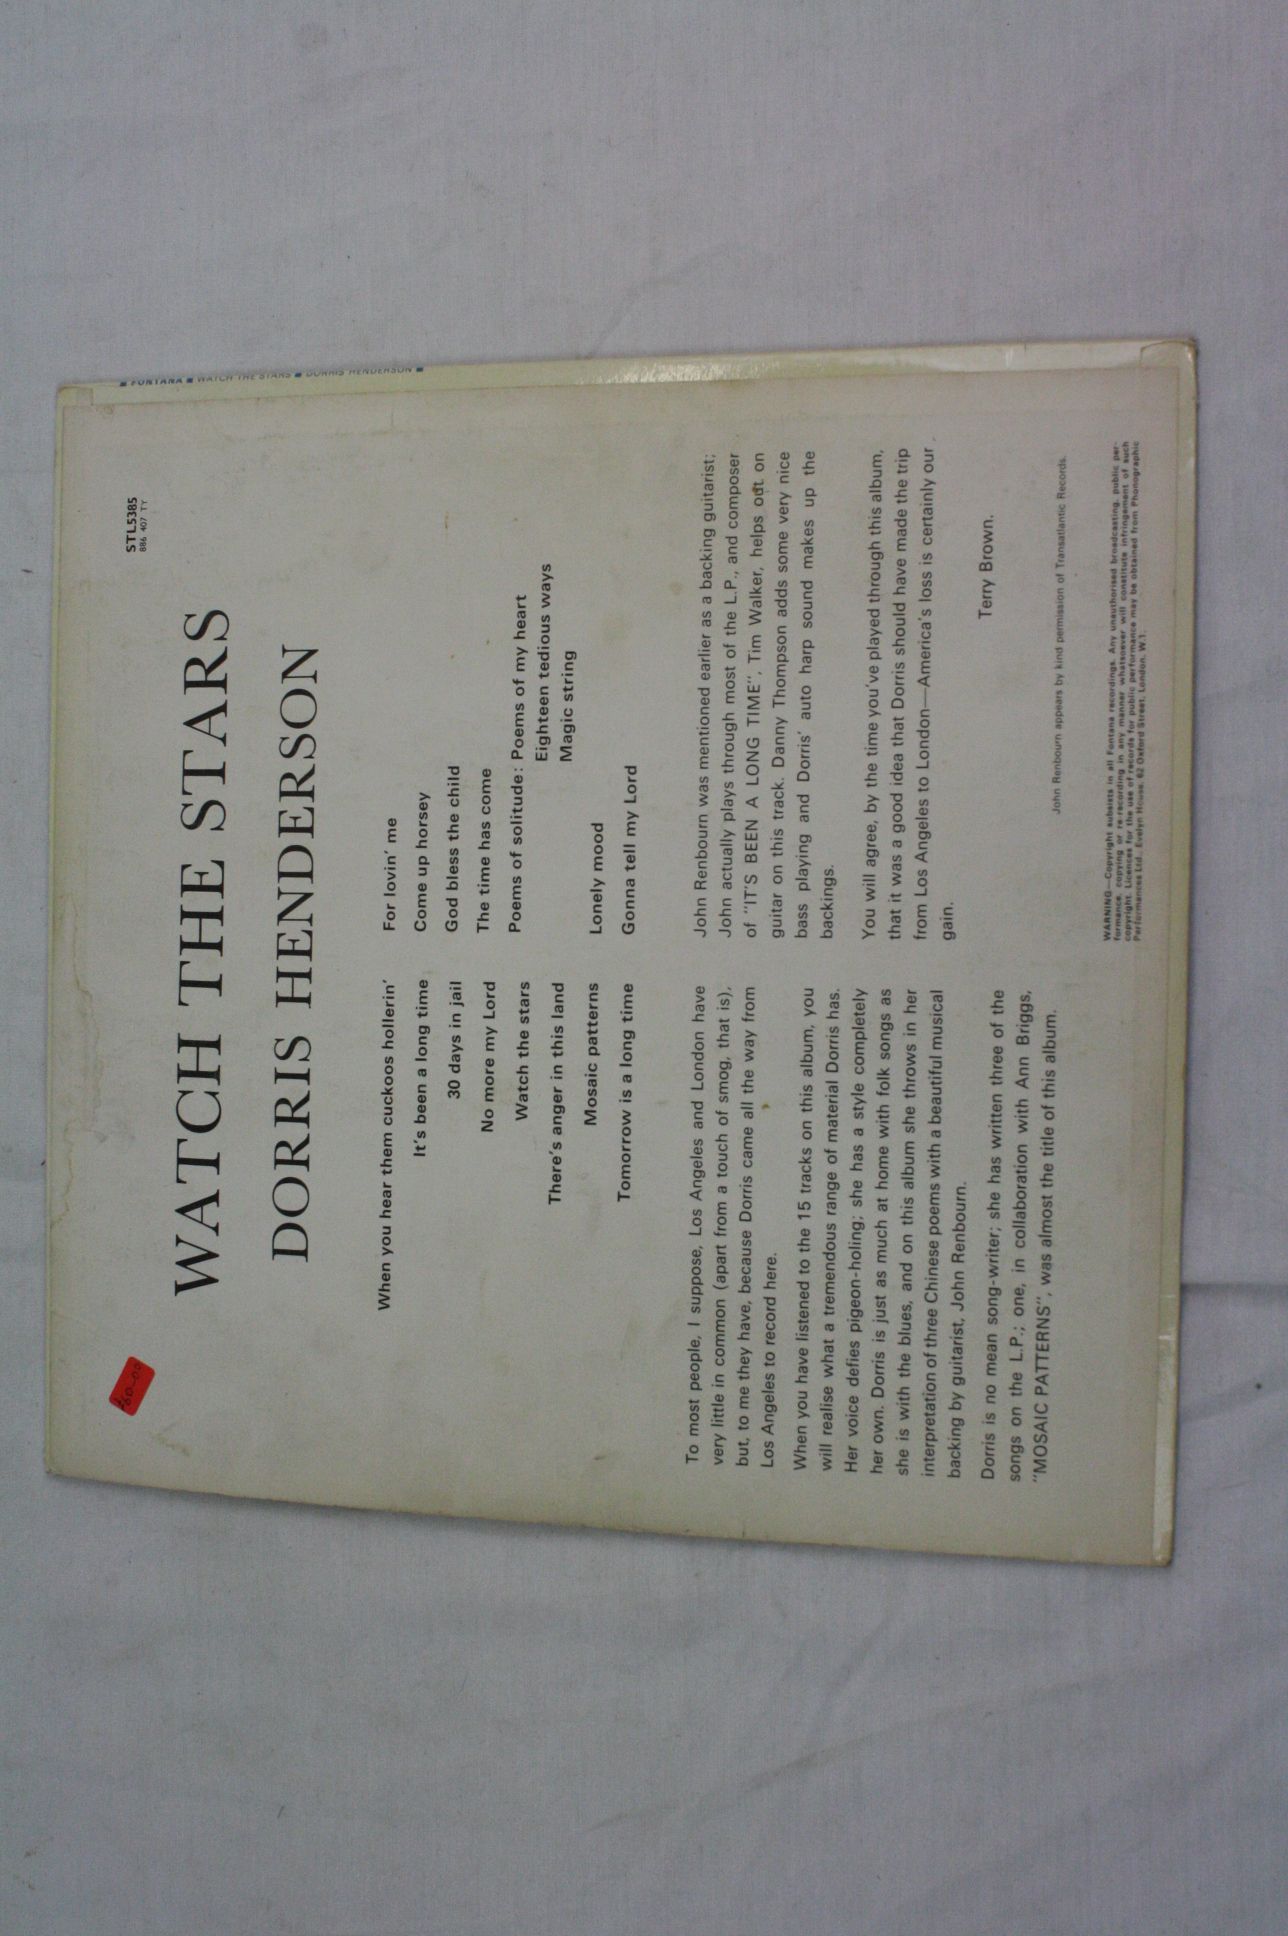 Vinyl - Dorris Henderson Watch The Stars LP on Fontana STL5385 886 407 TY sleeves and vinyl vg+ - Image 5 of 5